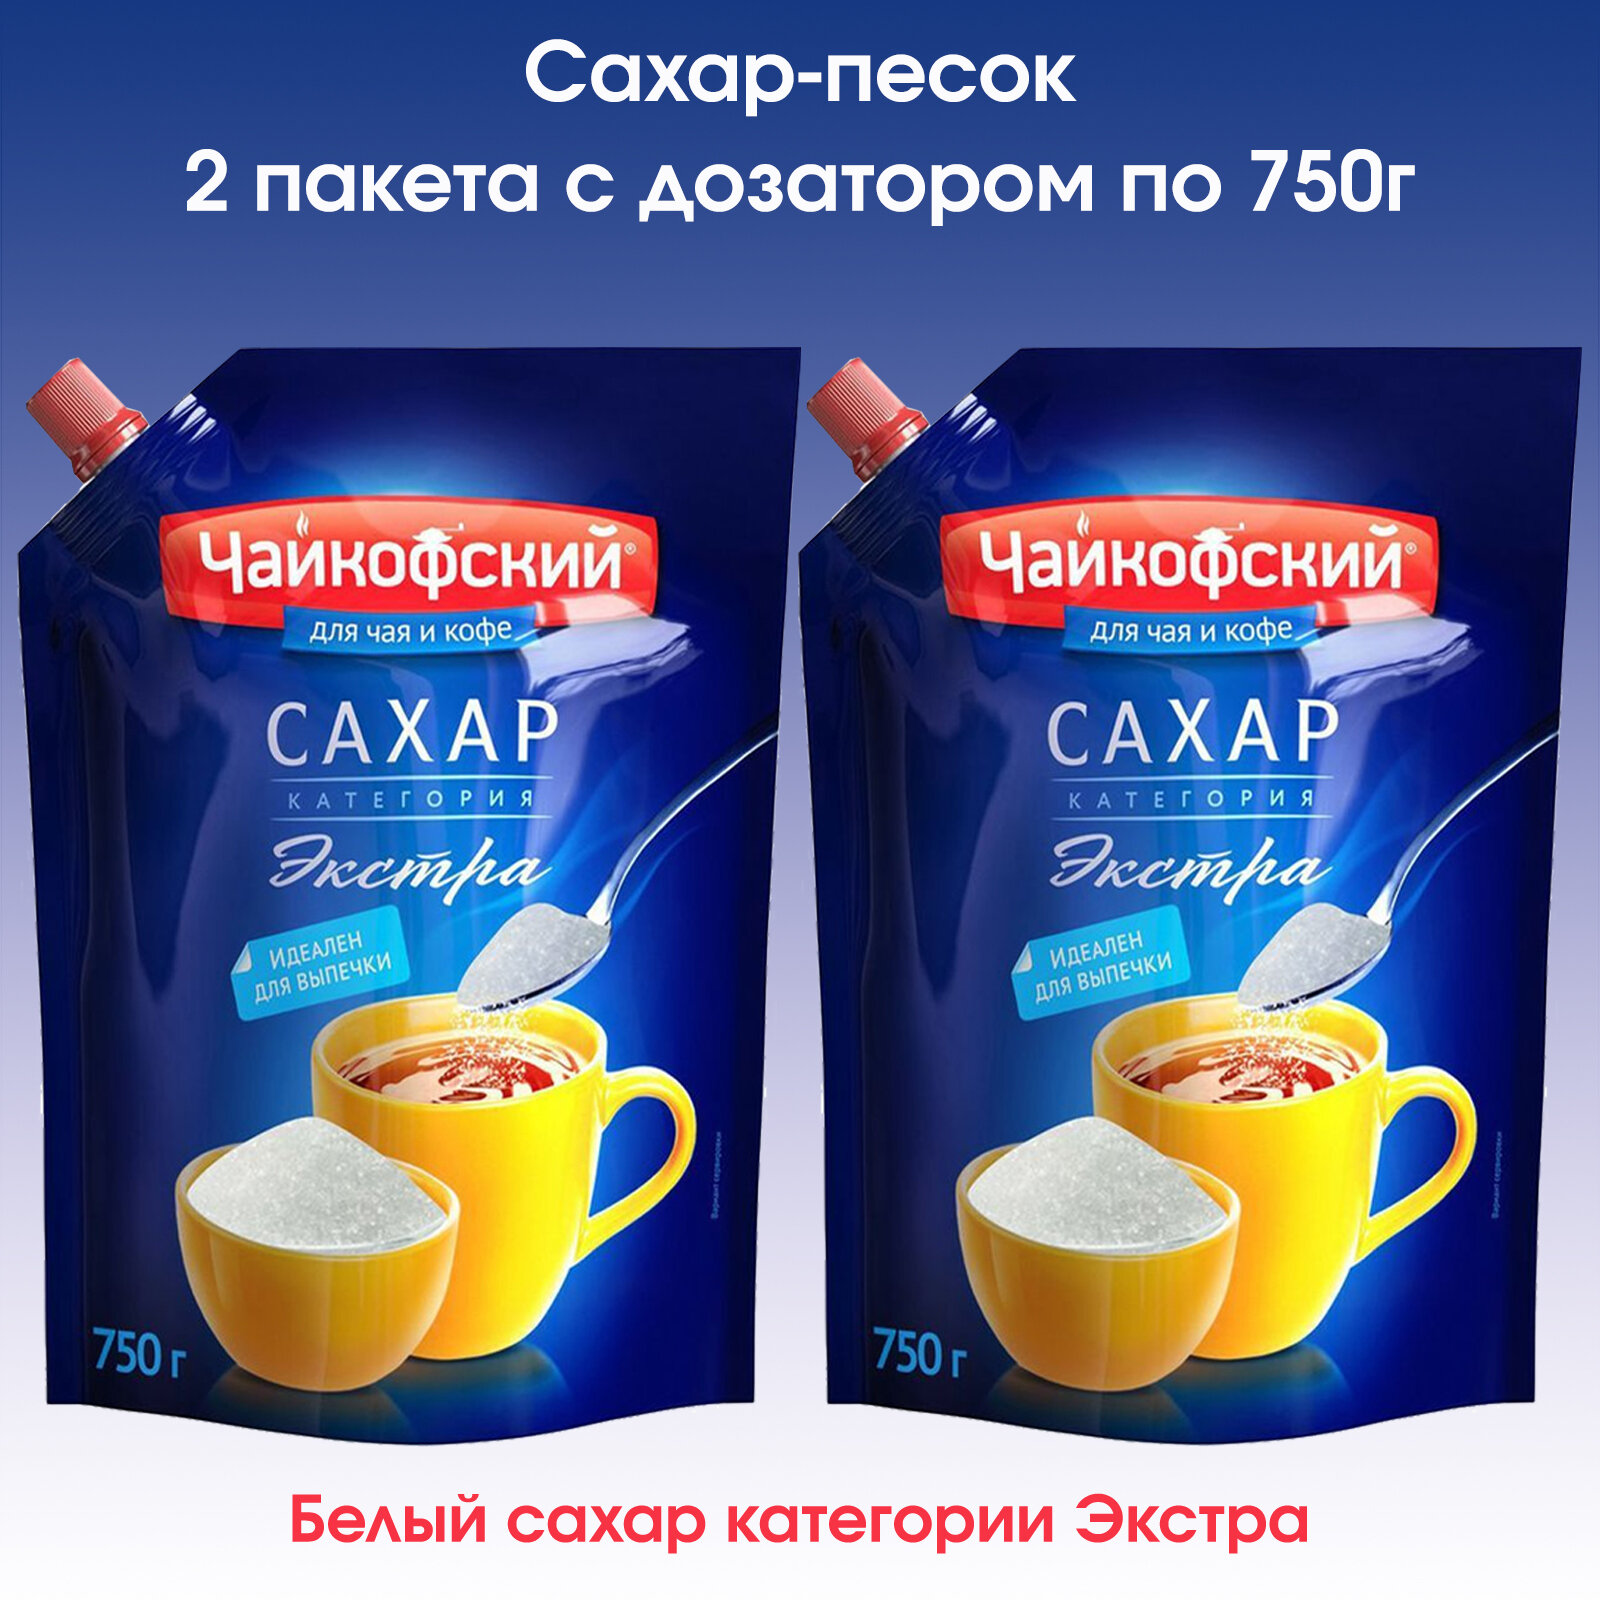 Сахар-песок Экстра "Чайкофский", 2 упаковки по 750г.